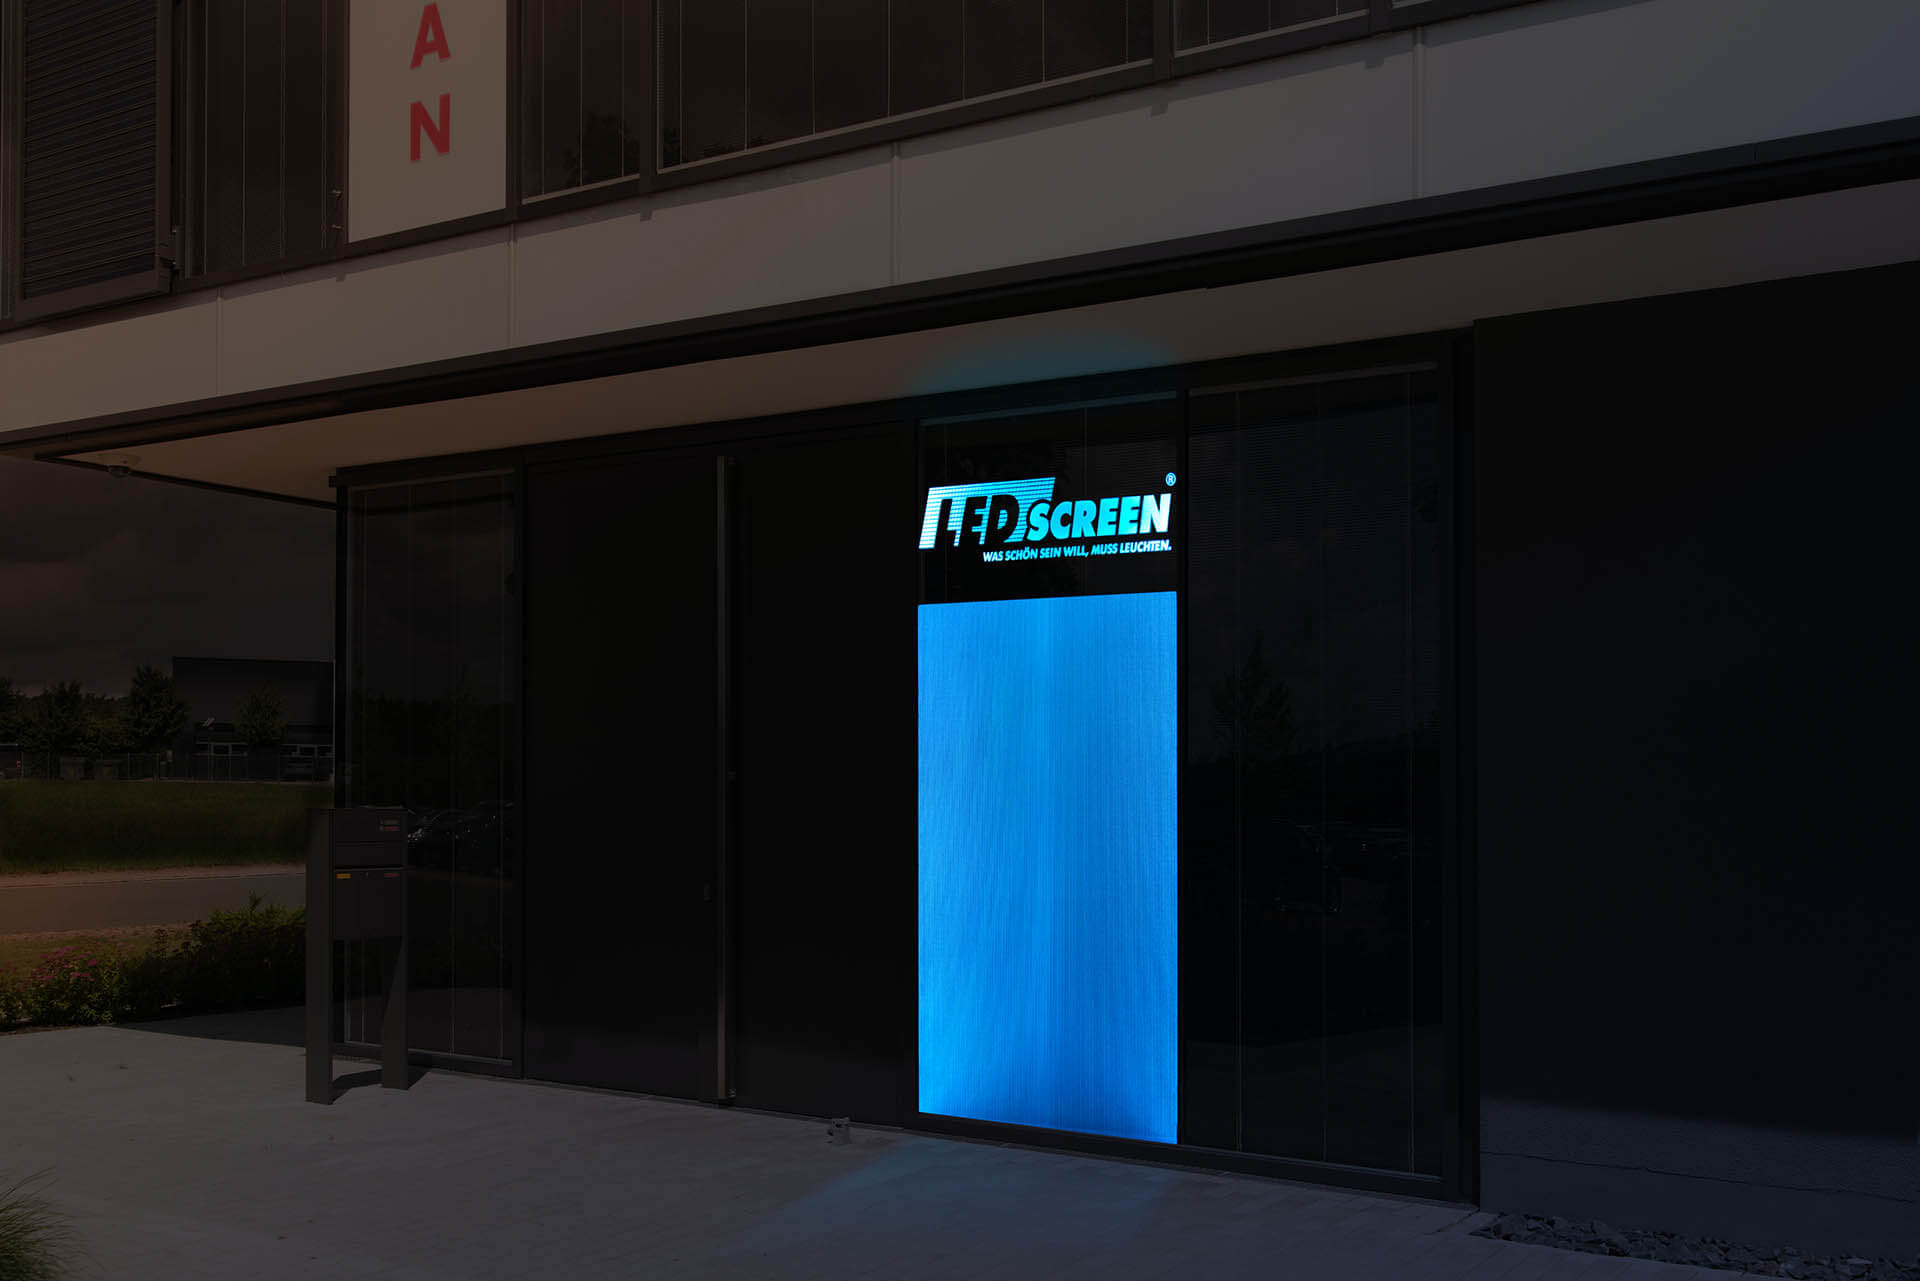 LED Isolierglas bei Nacht; blue LED glass window with logo